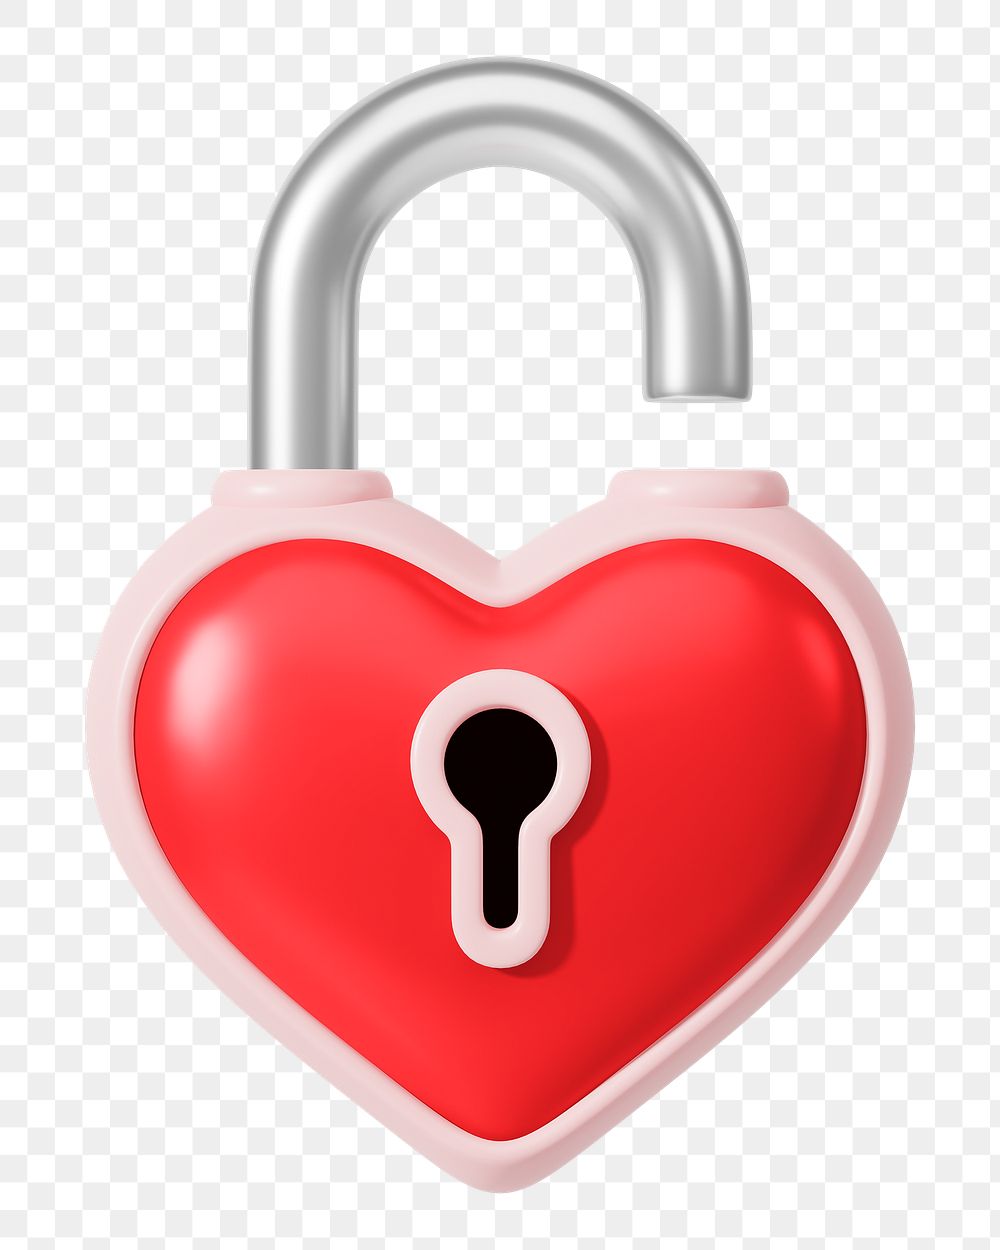 Red heart padlock png 3D element, transparent background